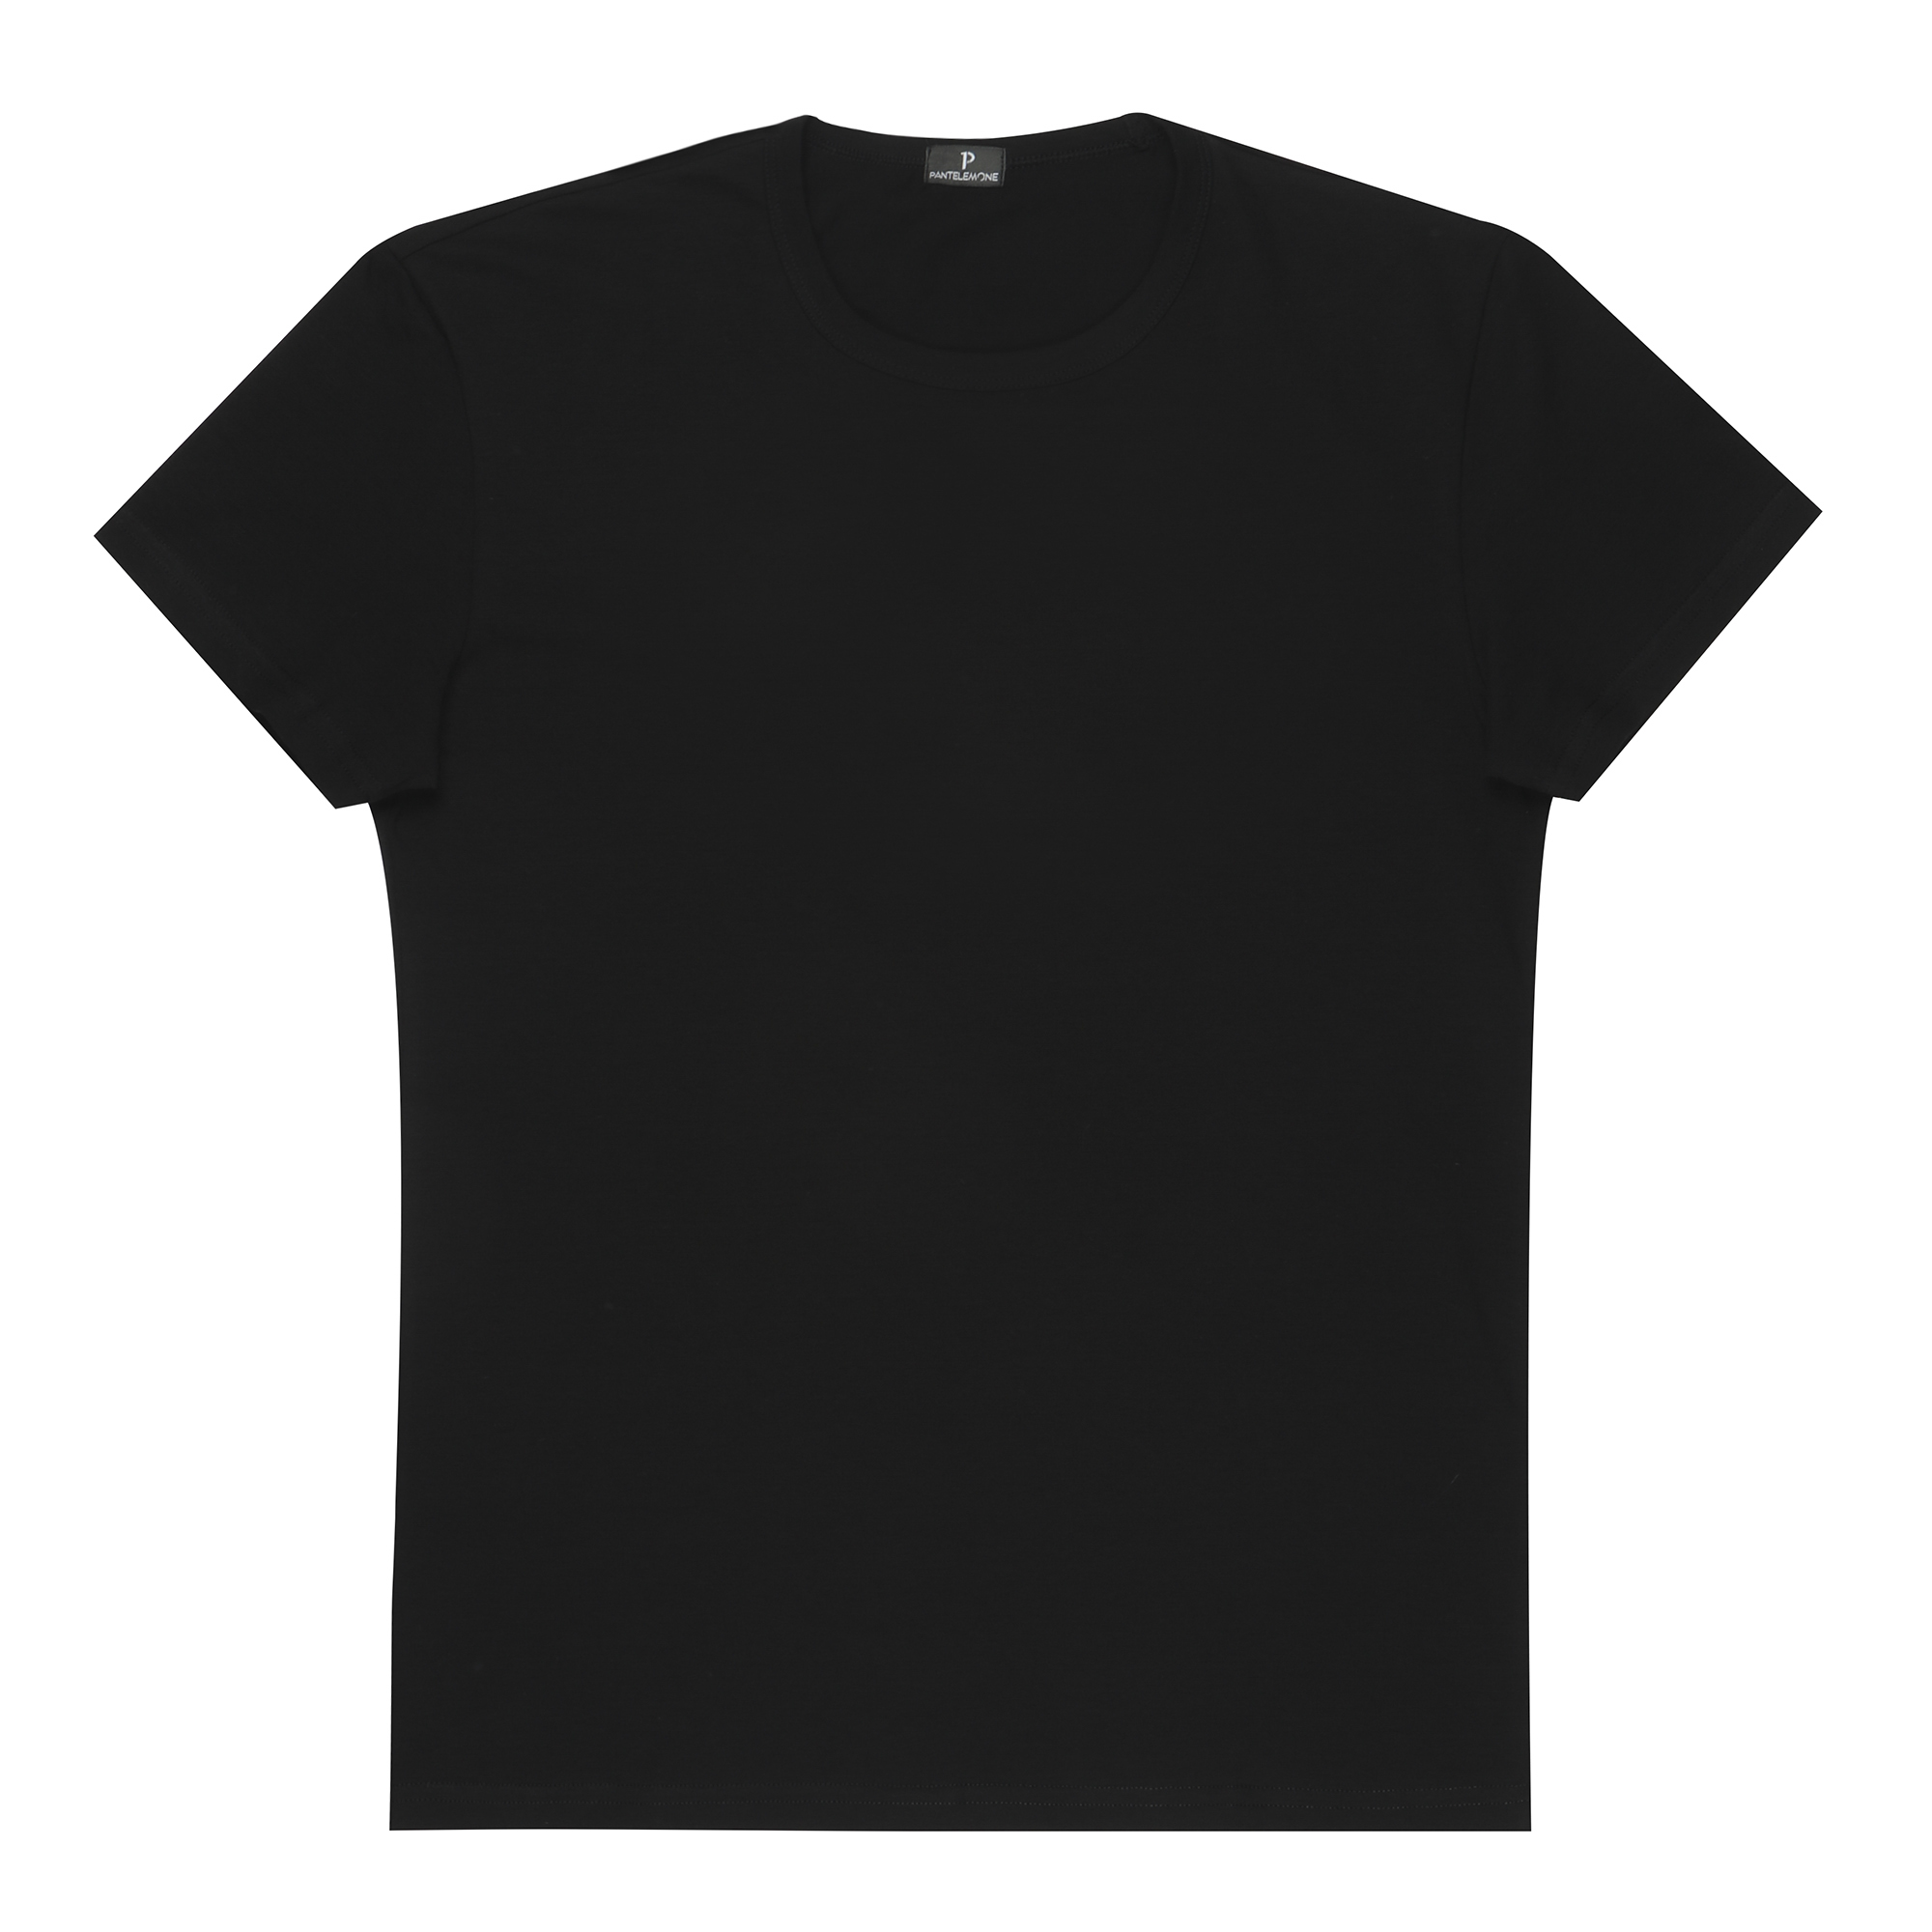 Мужская футболка Pantelemone MF-914 54 черная, цвет черный, размер 54 - фото 1